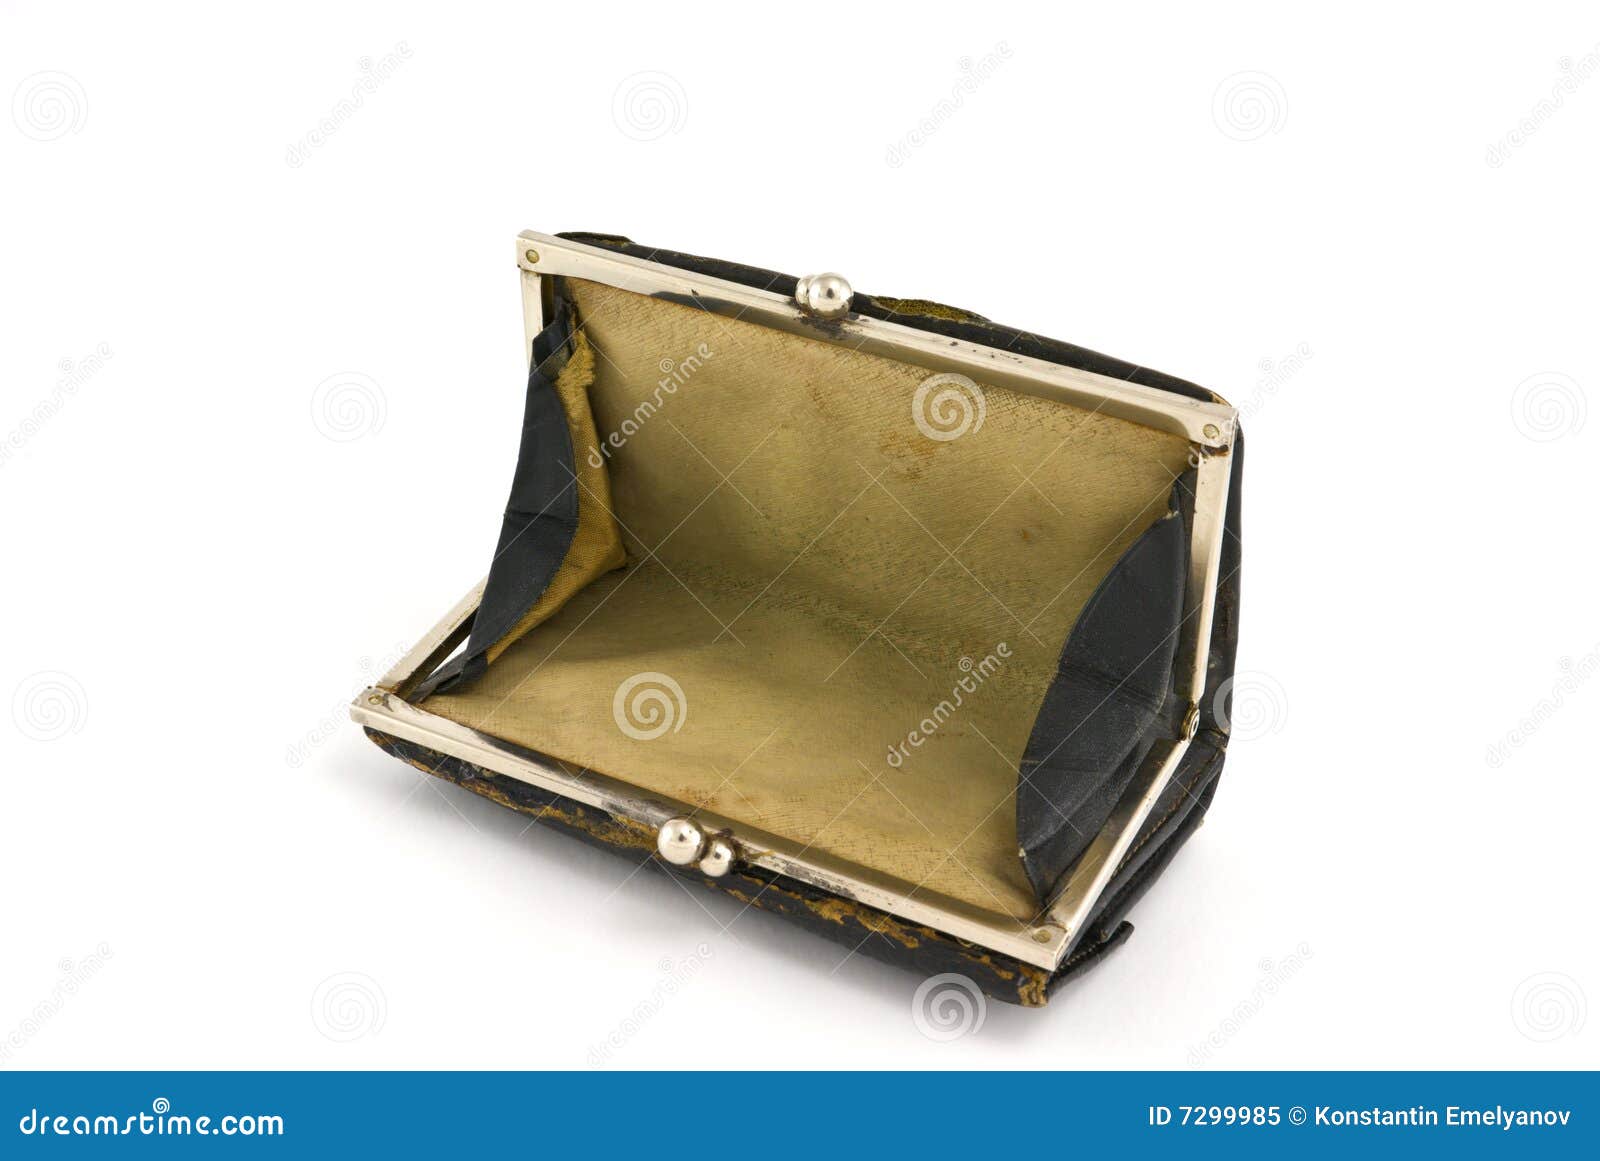 Senior see the empty purse - Stock Image - Everypixel